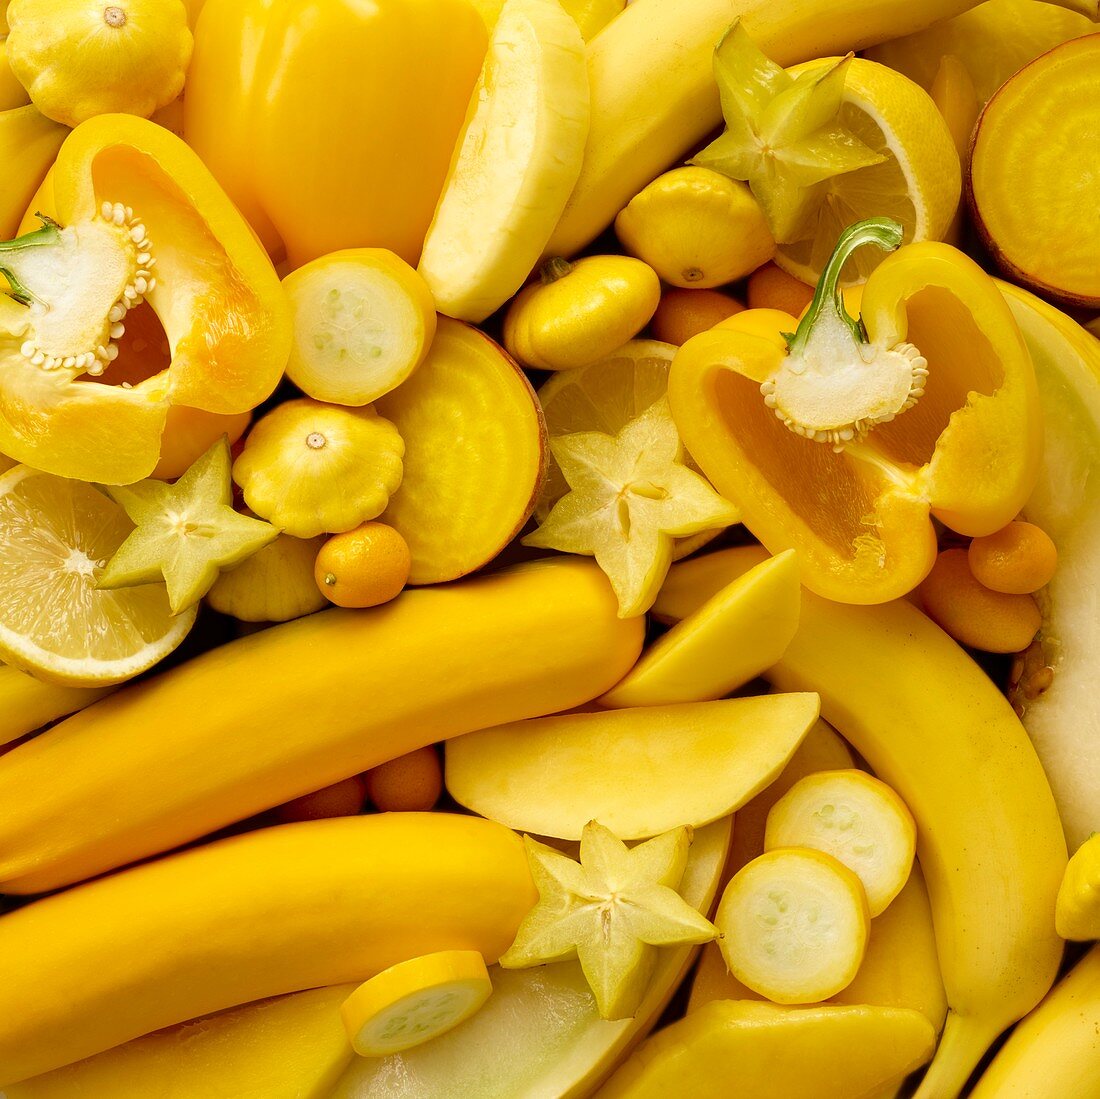 Fresh yellow produce